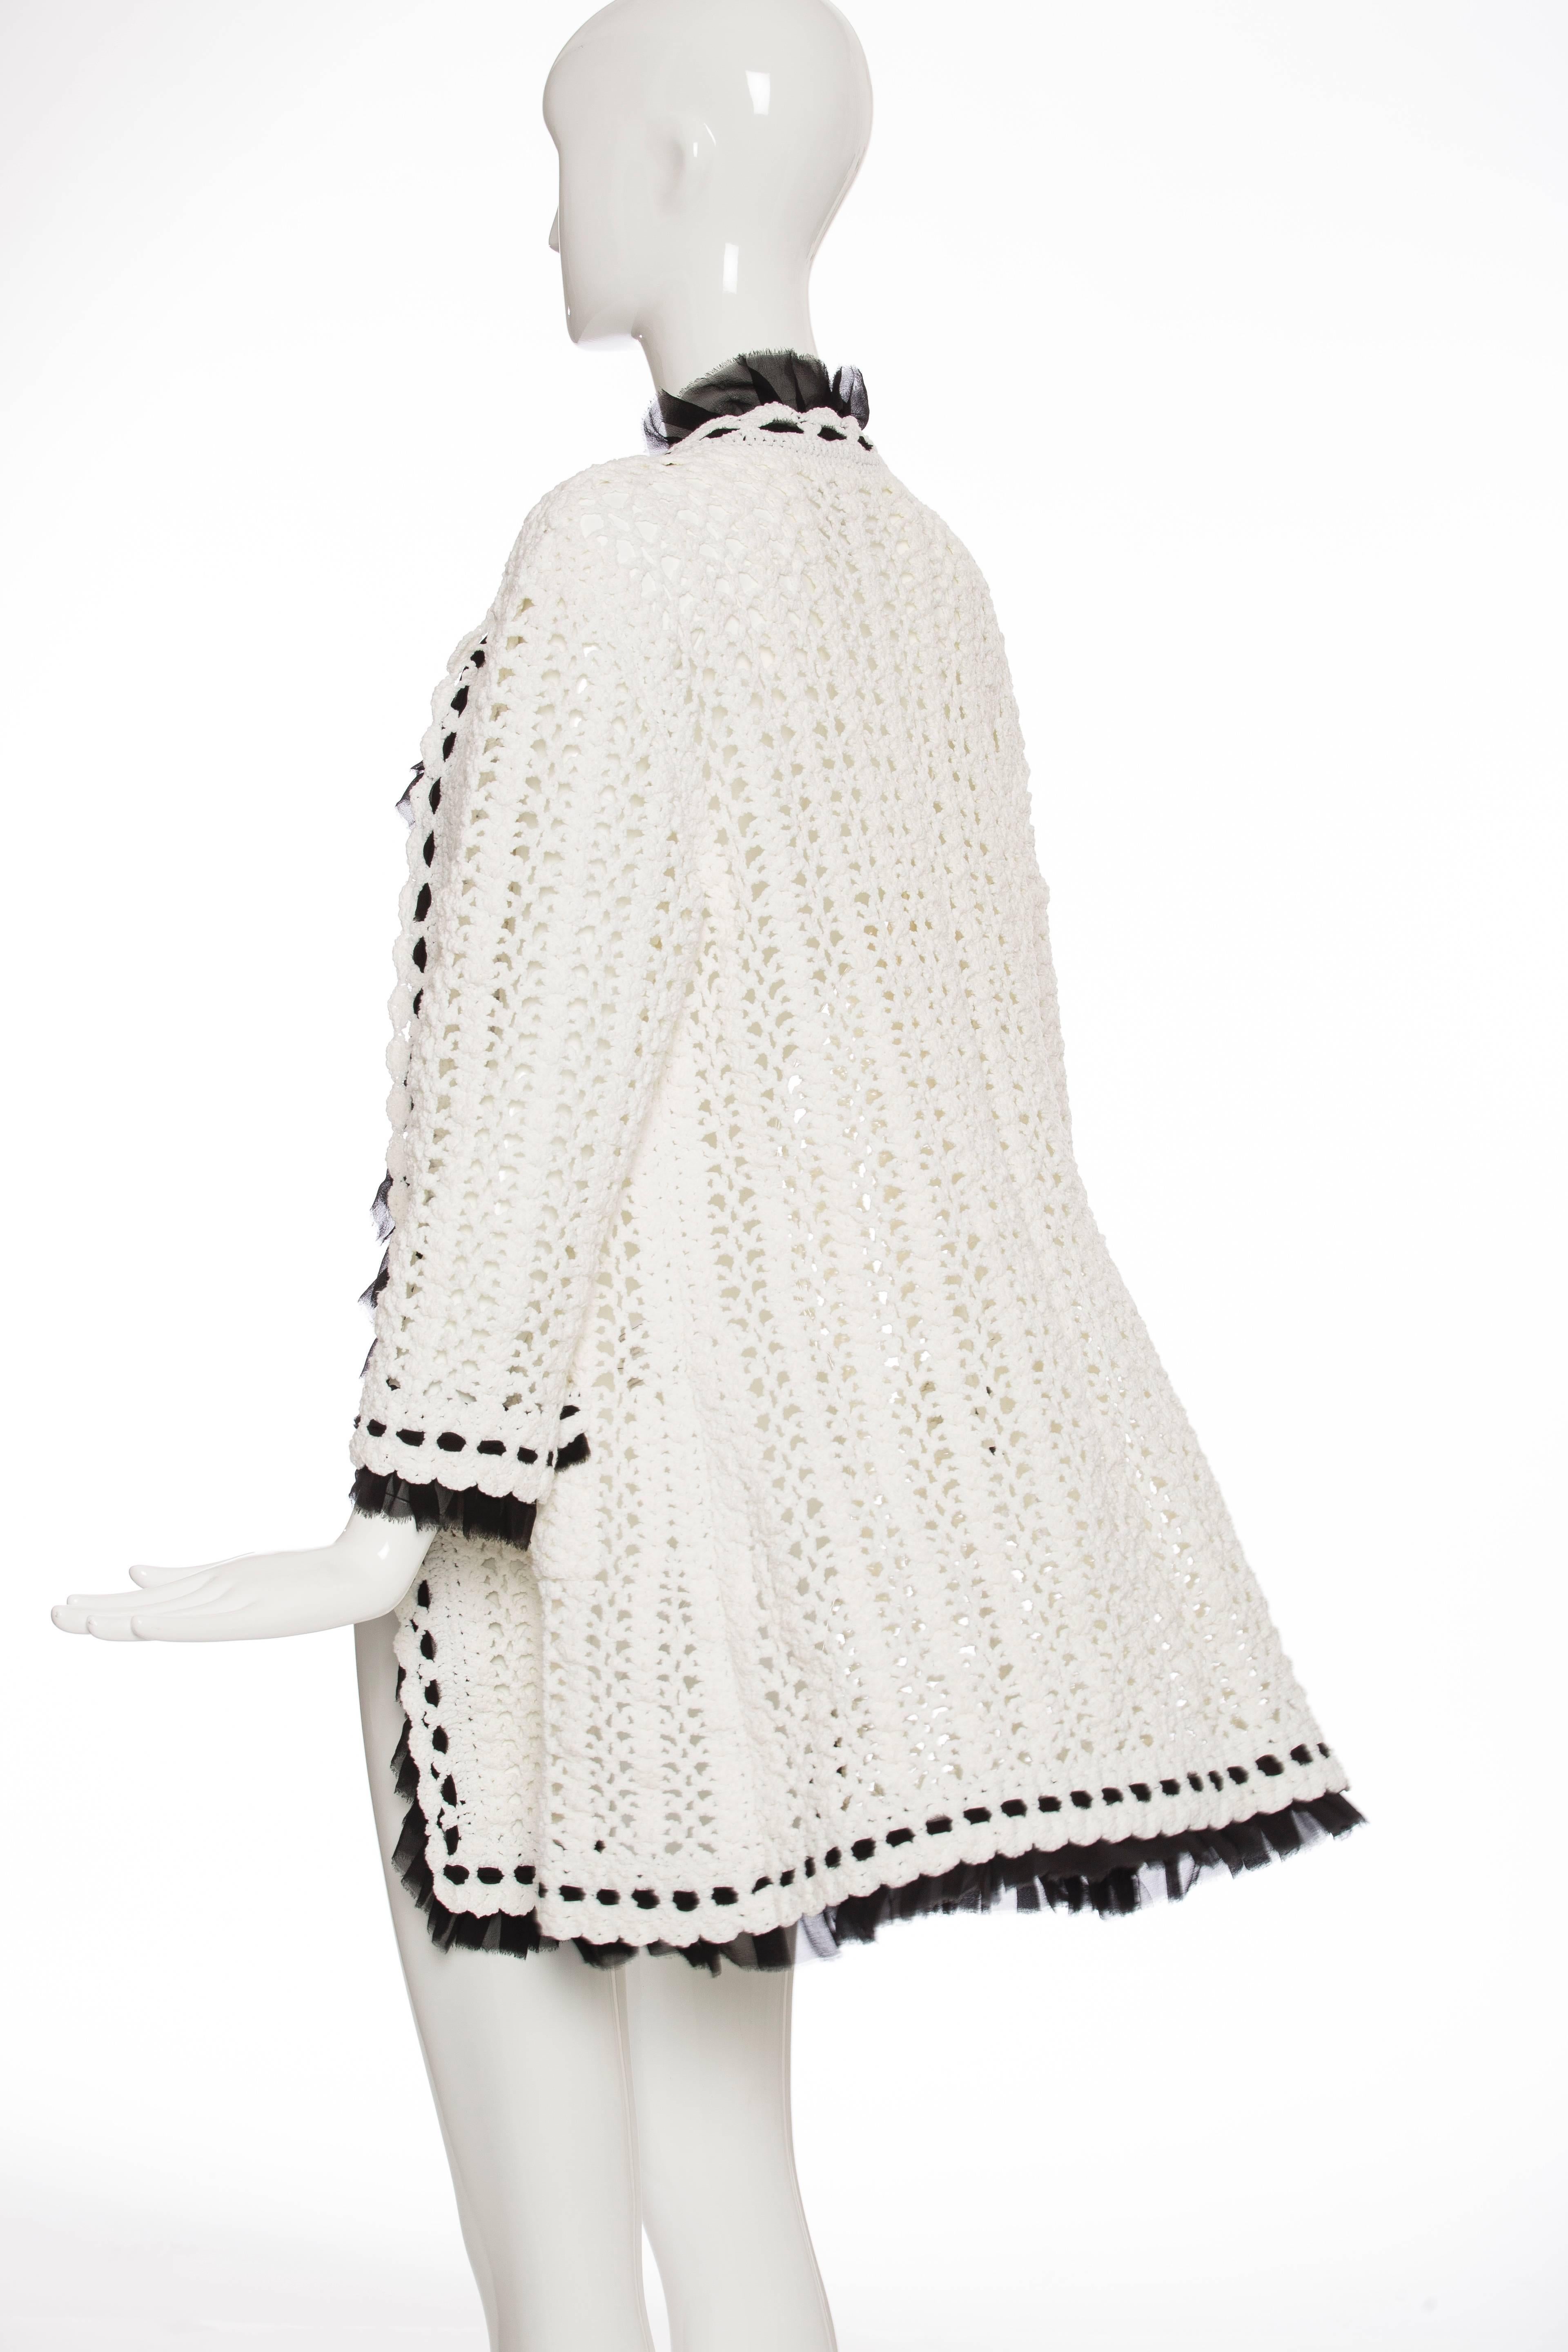 Chanel Ivory Crochet Knit Cardigan With Black Silk Chiffon Trim, Spring 2005 For Sale 2